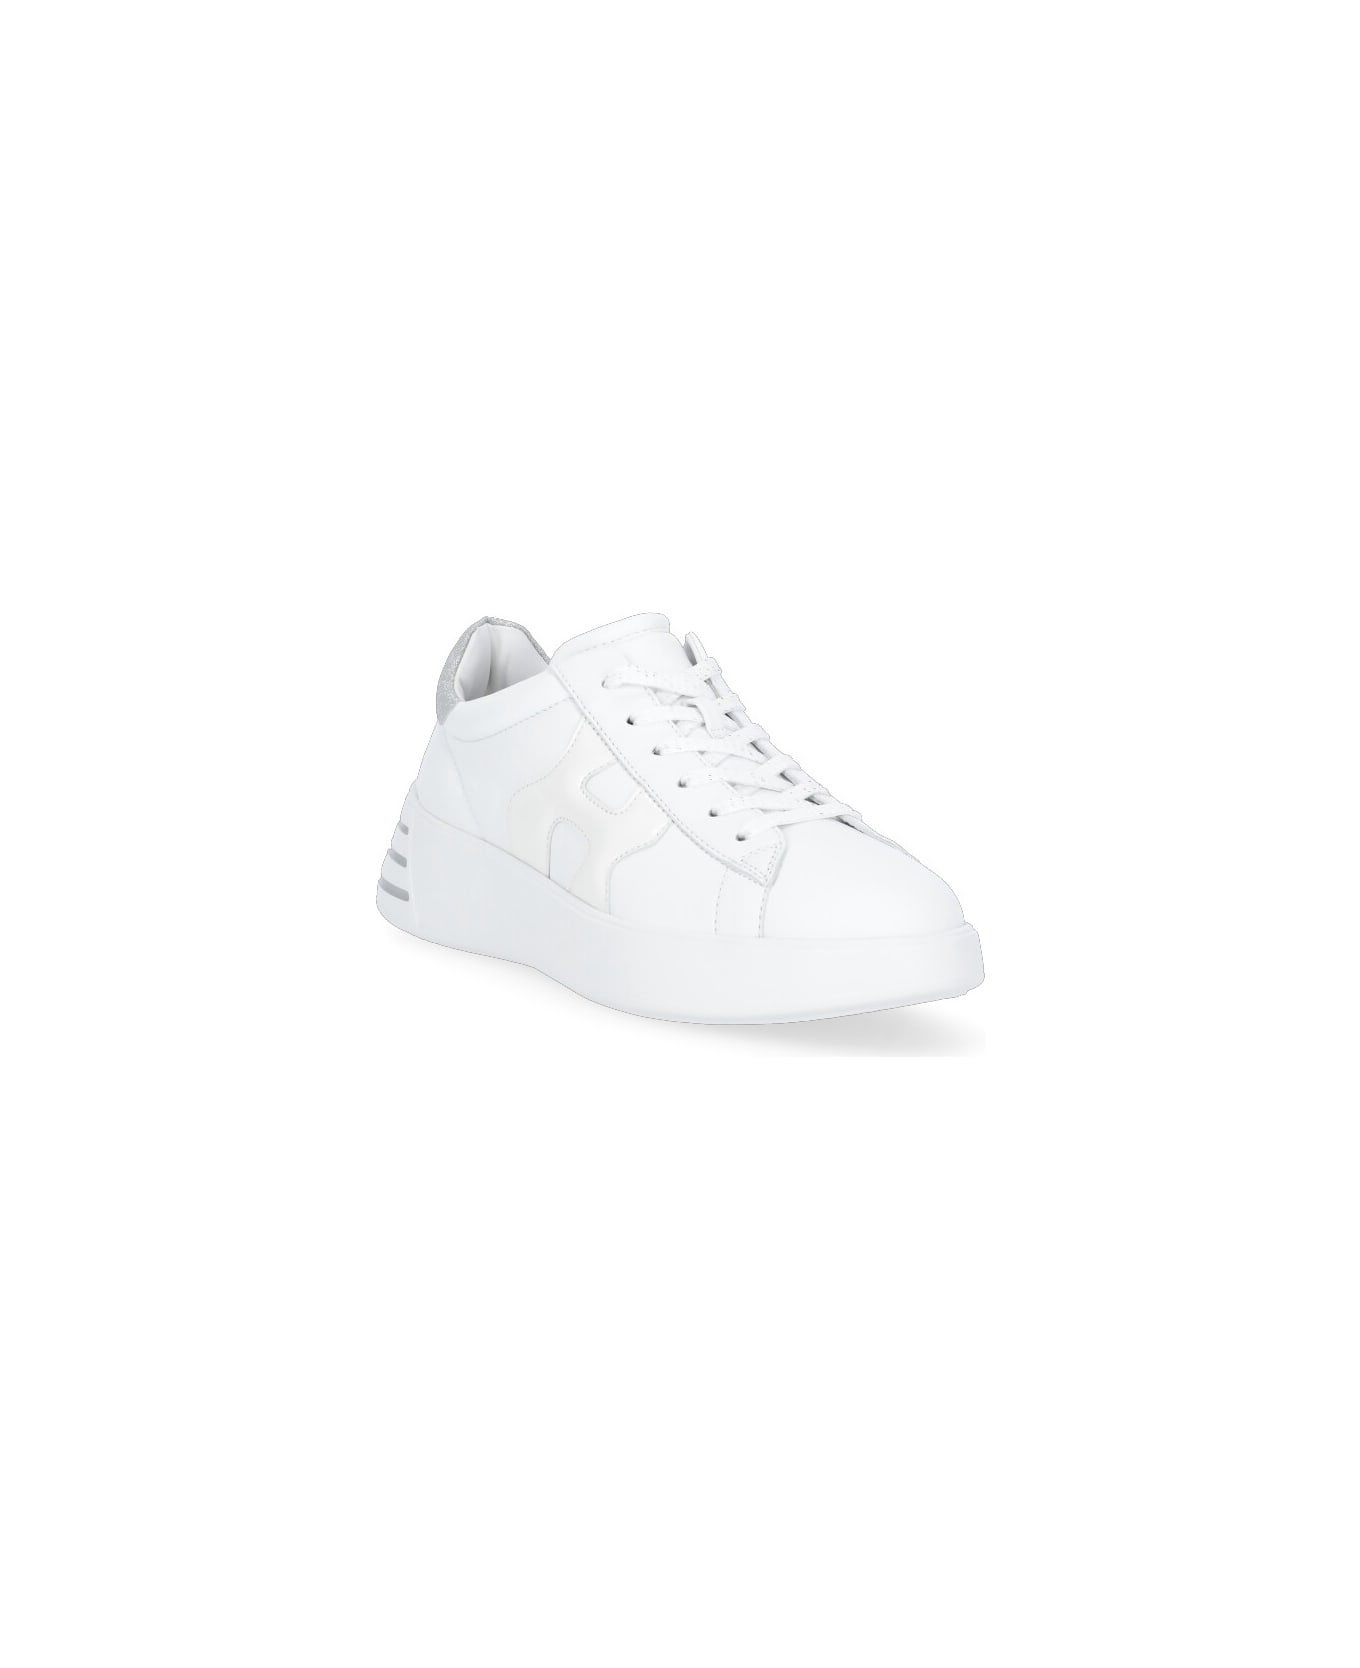 Hogan Rebel Sneakers - White スニーカー